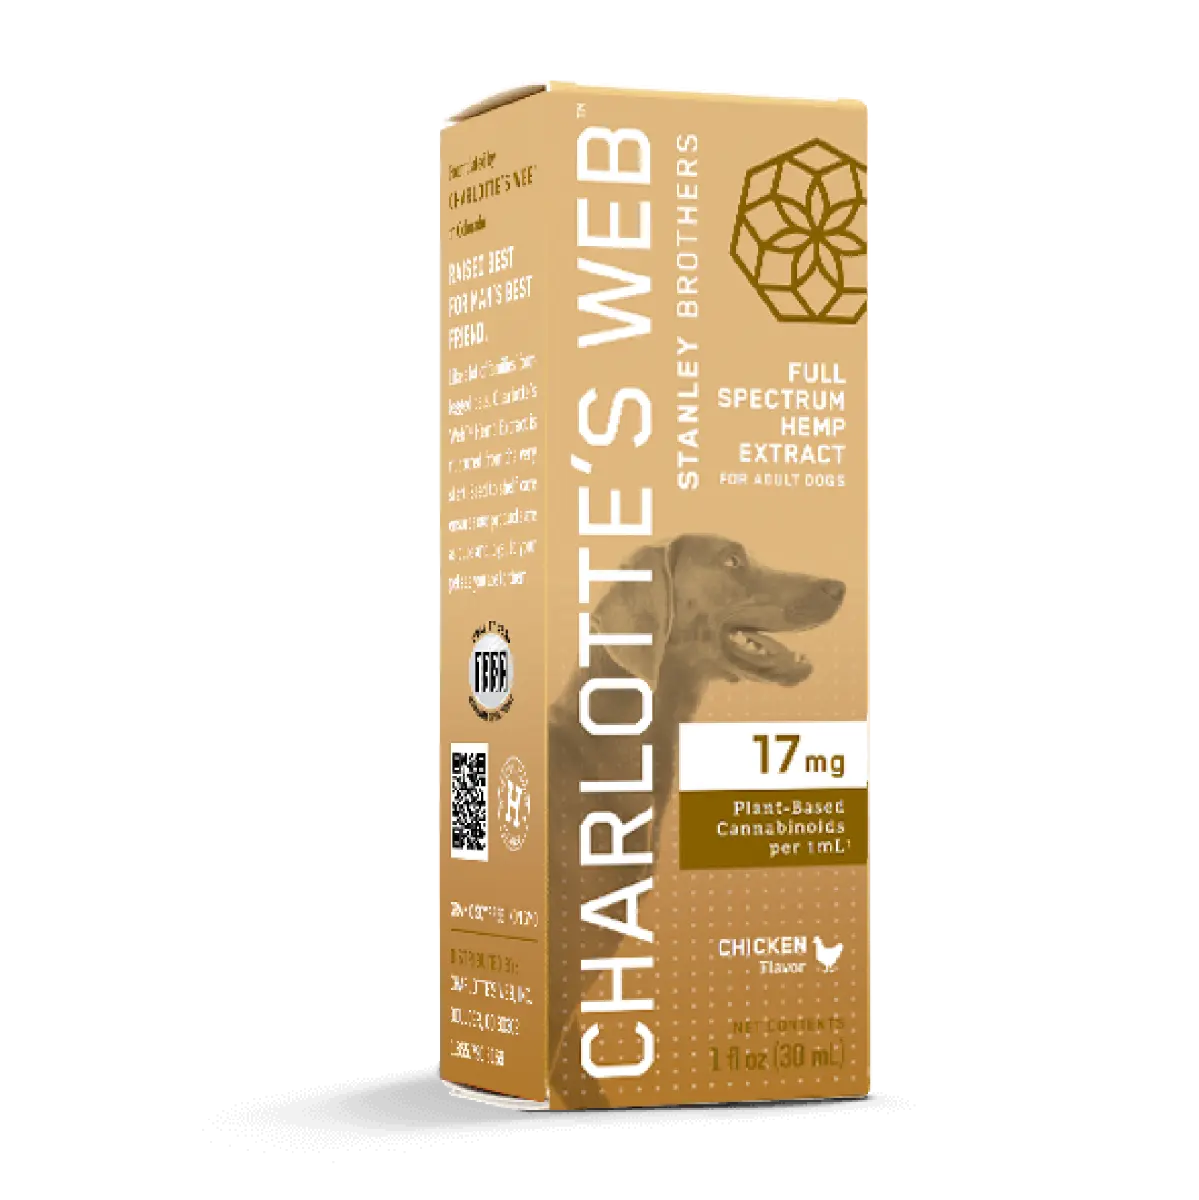 Charlotte’s Web, Full Spectrum Hemp Extract for Adult Dogs, Chicken Flavor, Full Spectrum, 1oz, 510mg CBD 1